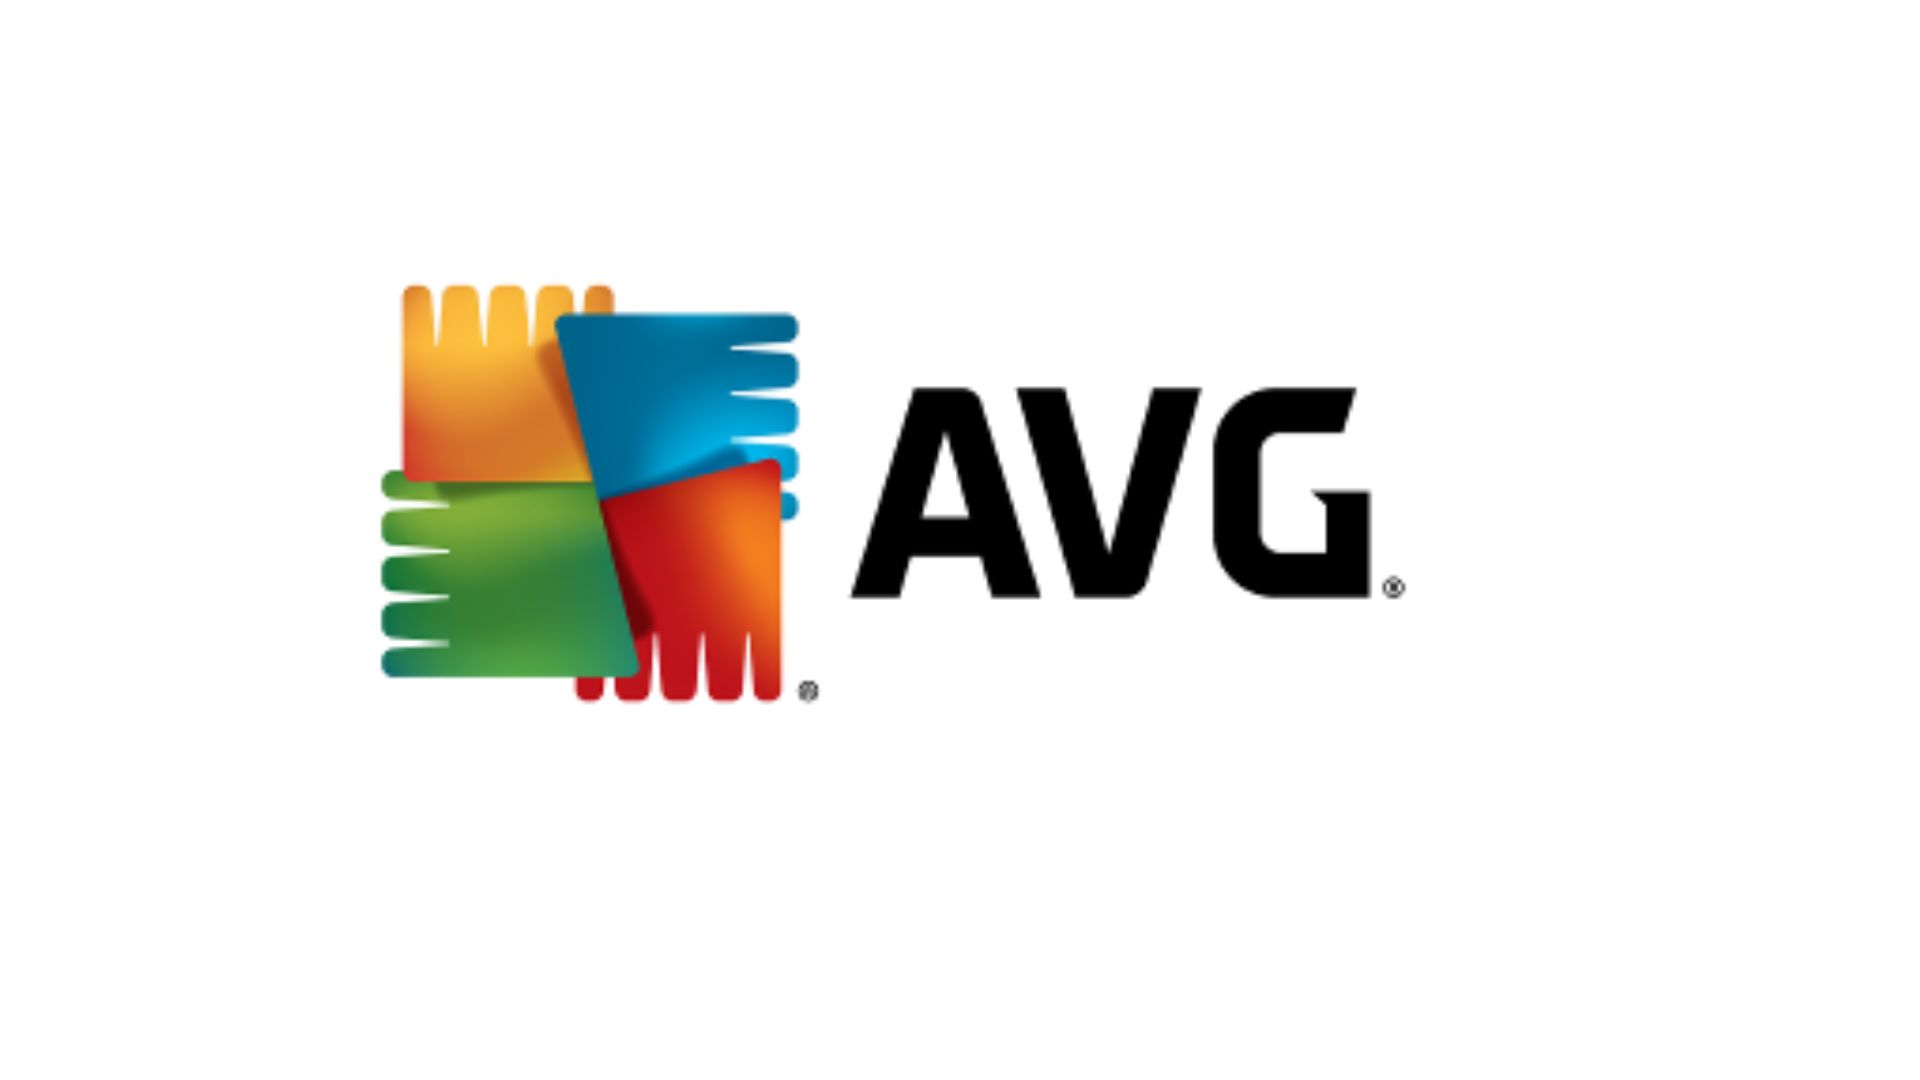 DRI AVG Technologies: Don’t Panic About Your AVG